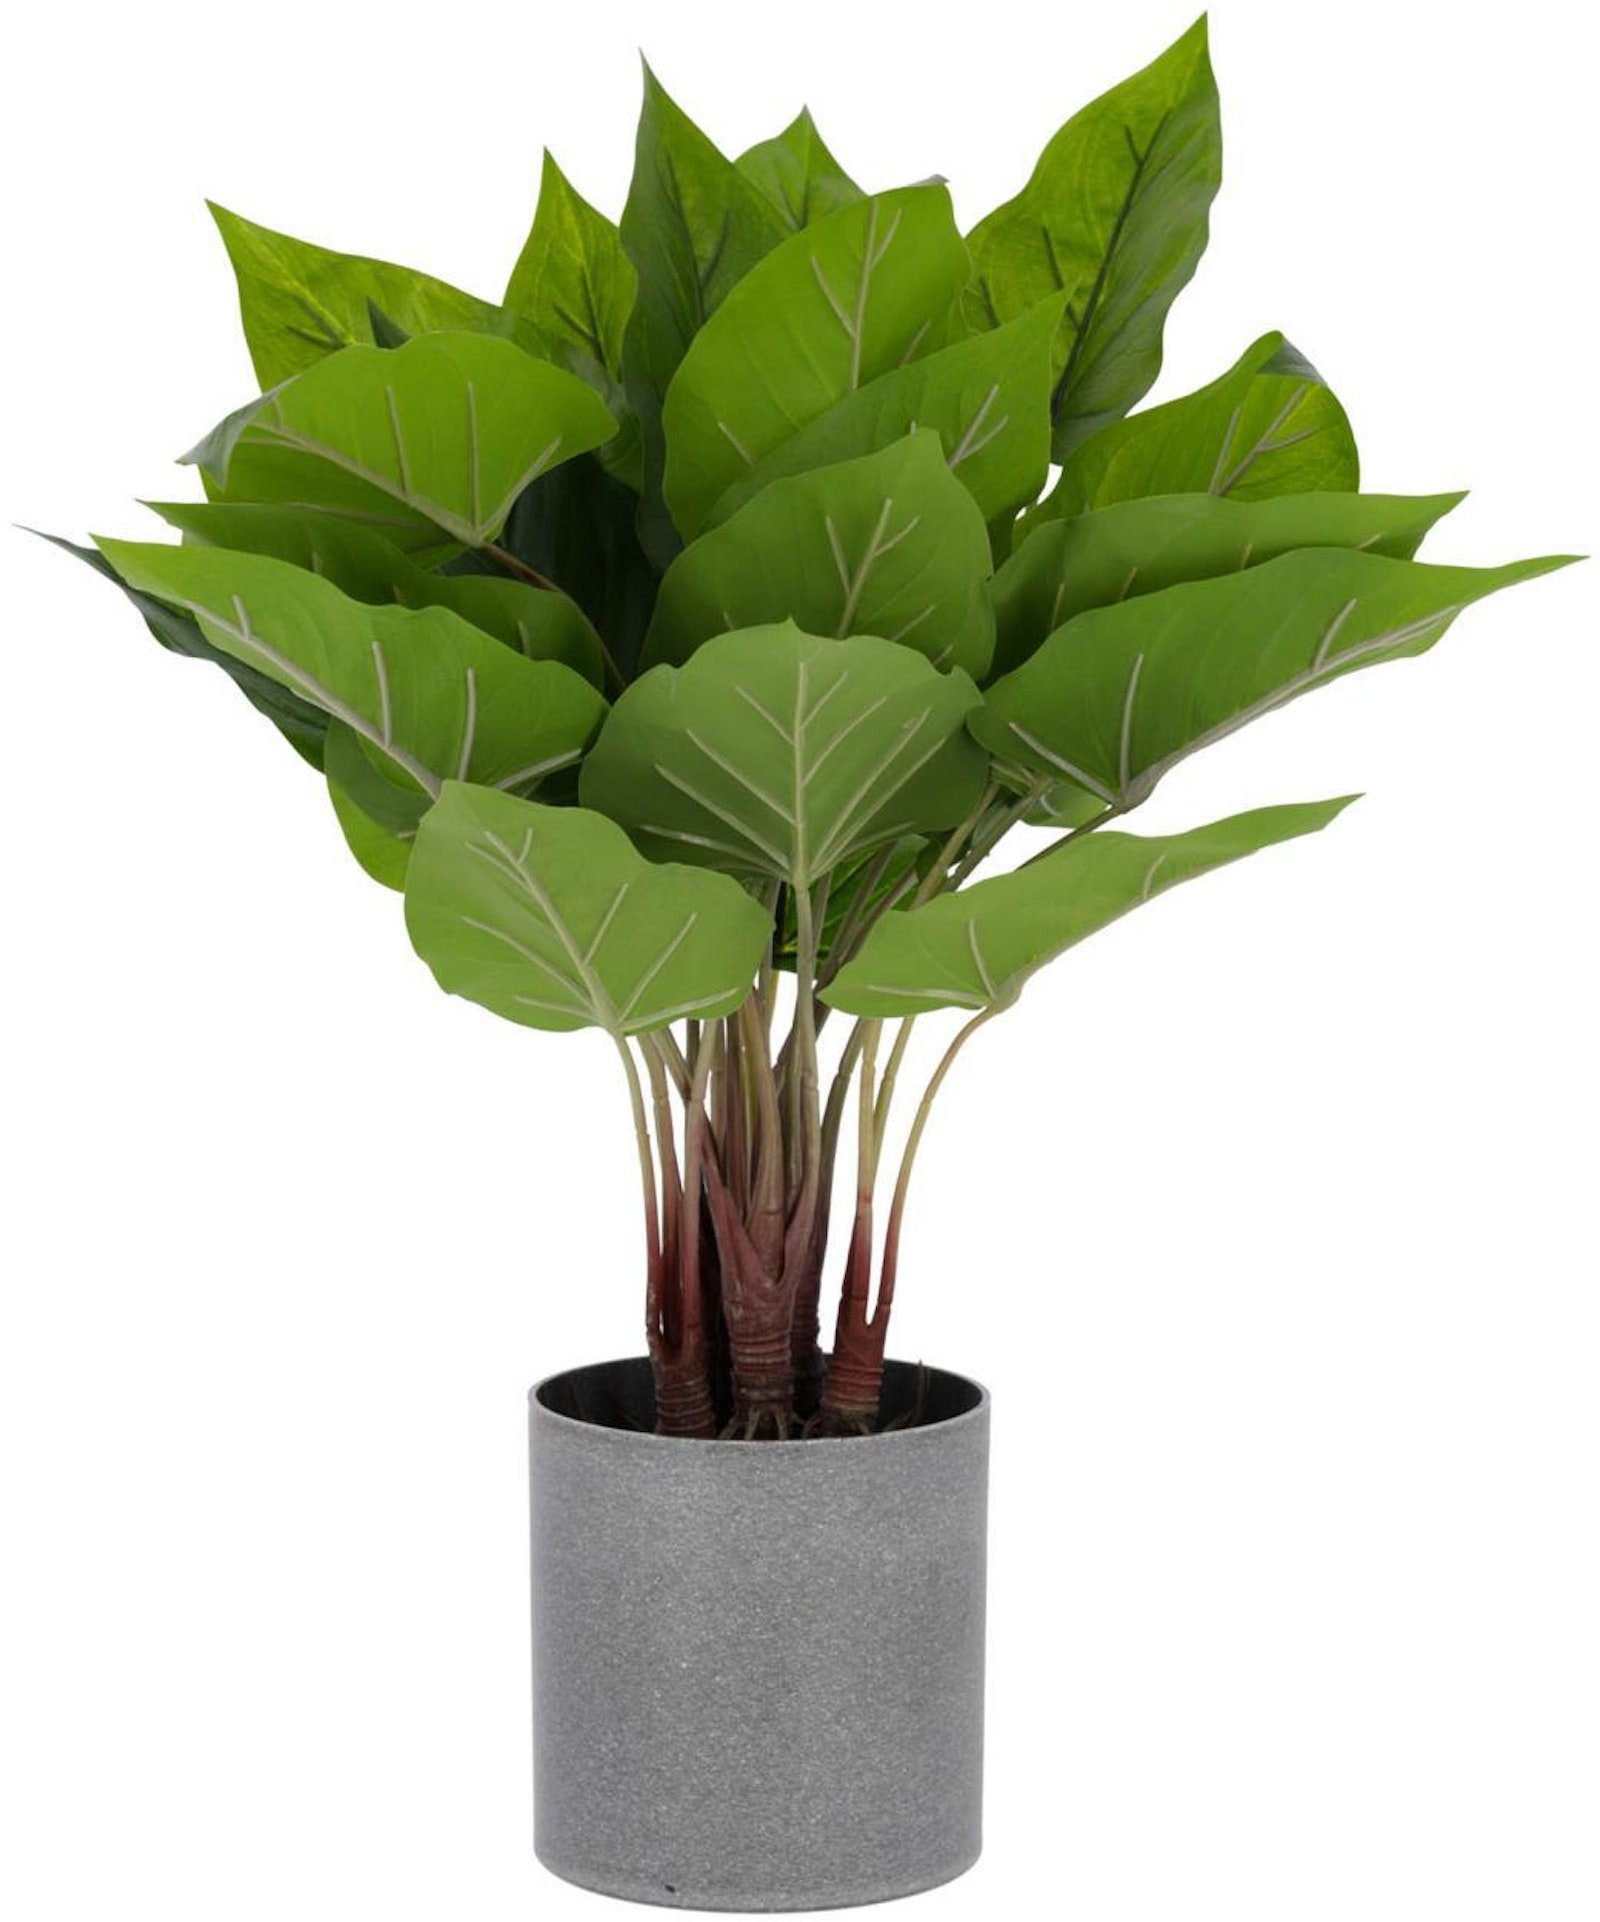 Anthurium, Kunstig plante, Plast by LaForma (H: 50 cm. x B: 40 cm. x L: 40 cm., Grøn/Grå)